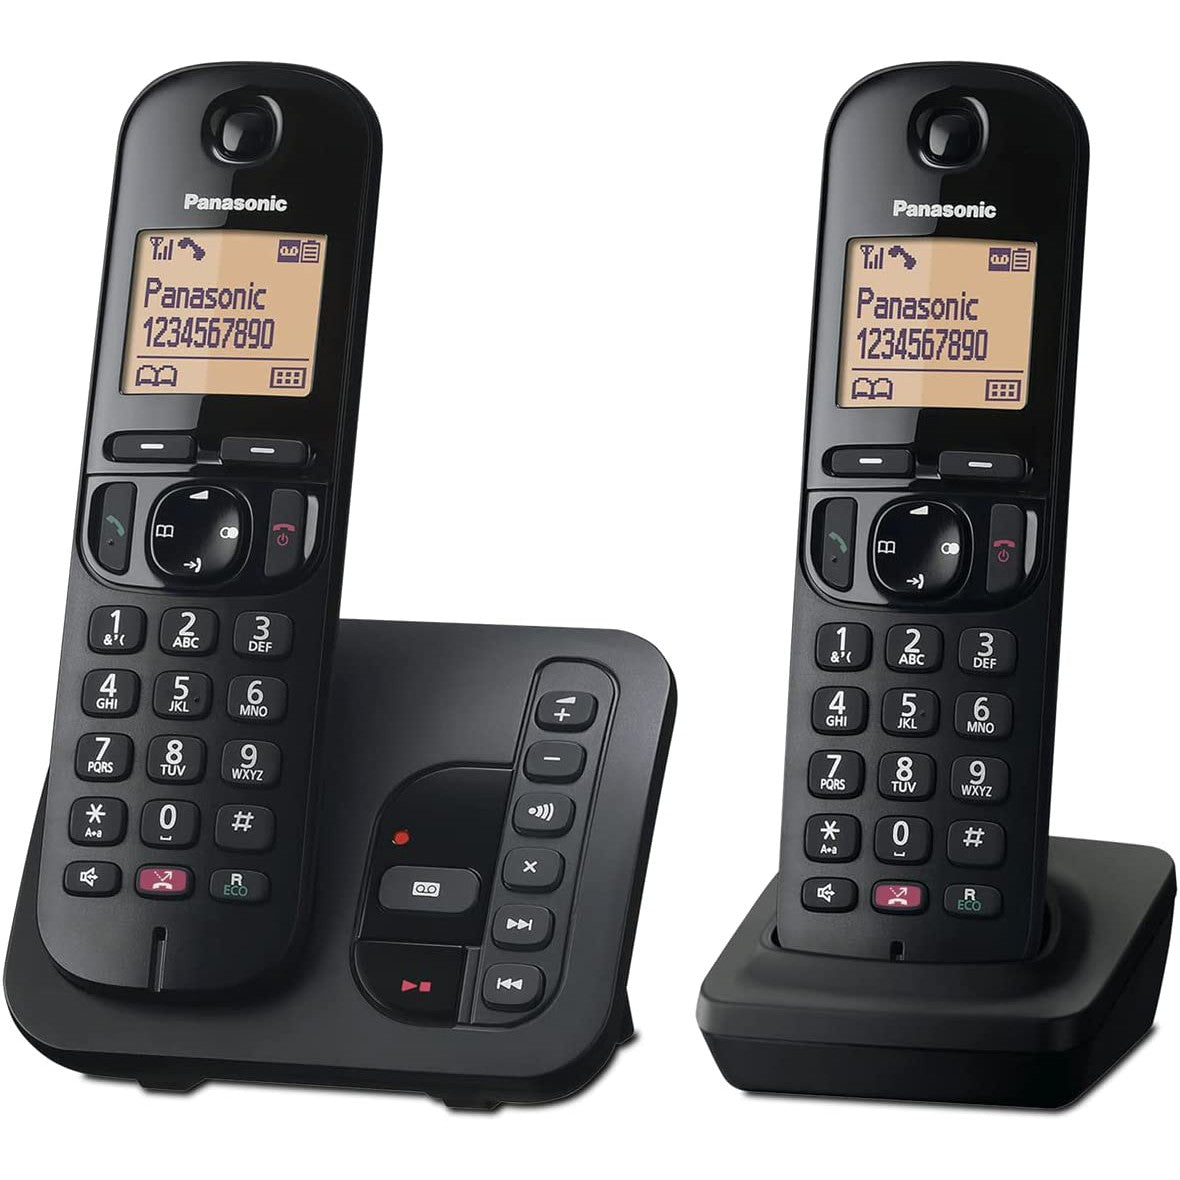 Panasonic KX-TGC262 Digital Cordless Phone Twin Pack - Black - Refurbished Good